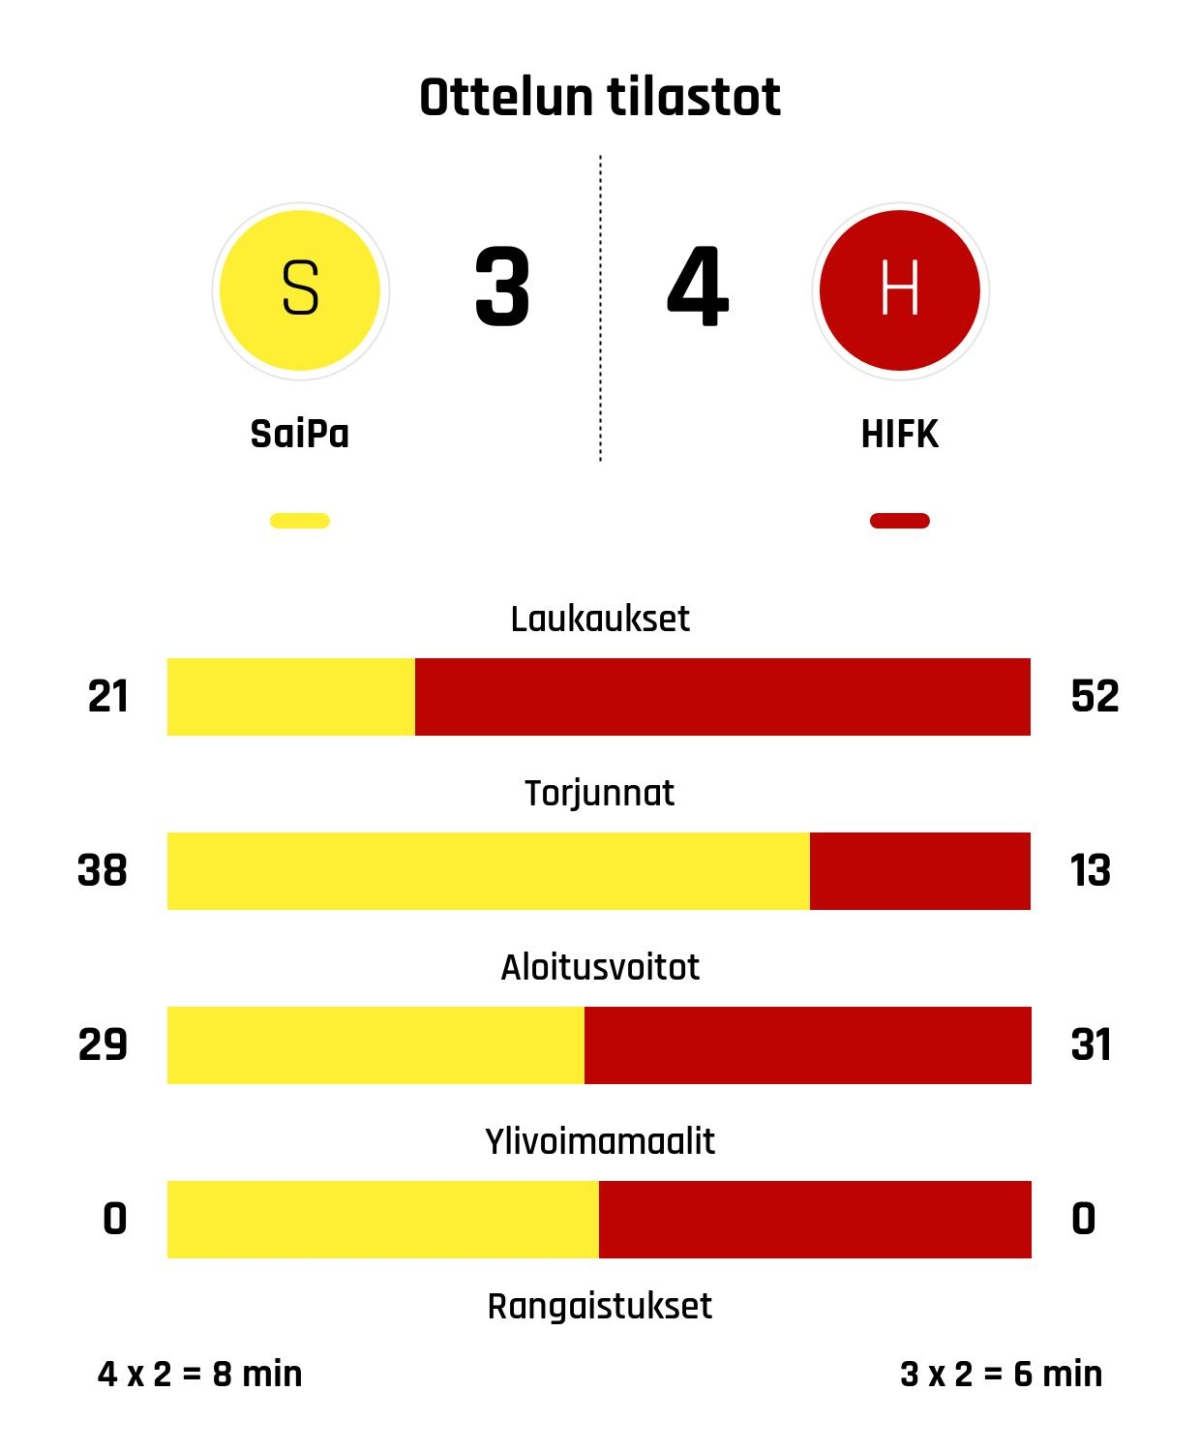 SaiPa taipui rankkareilla HIFK:lle